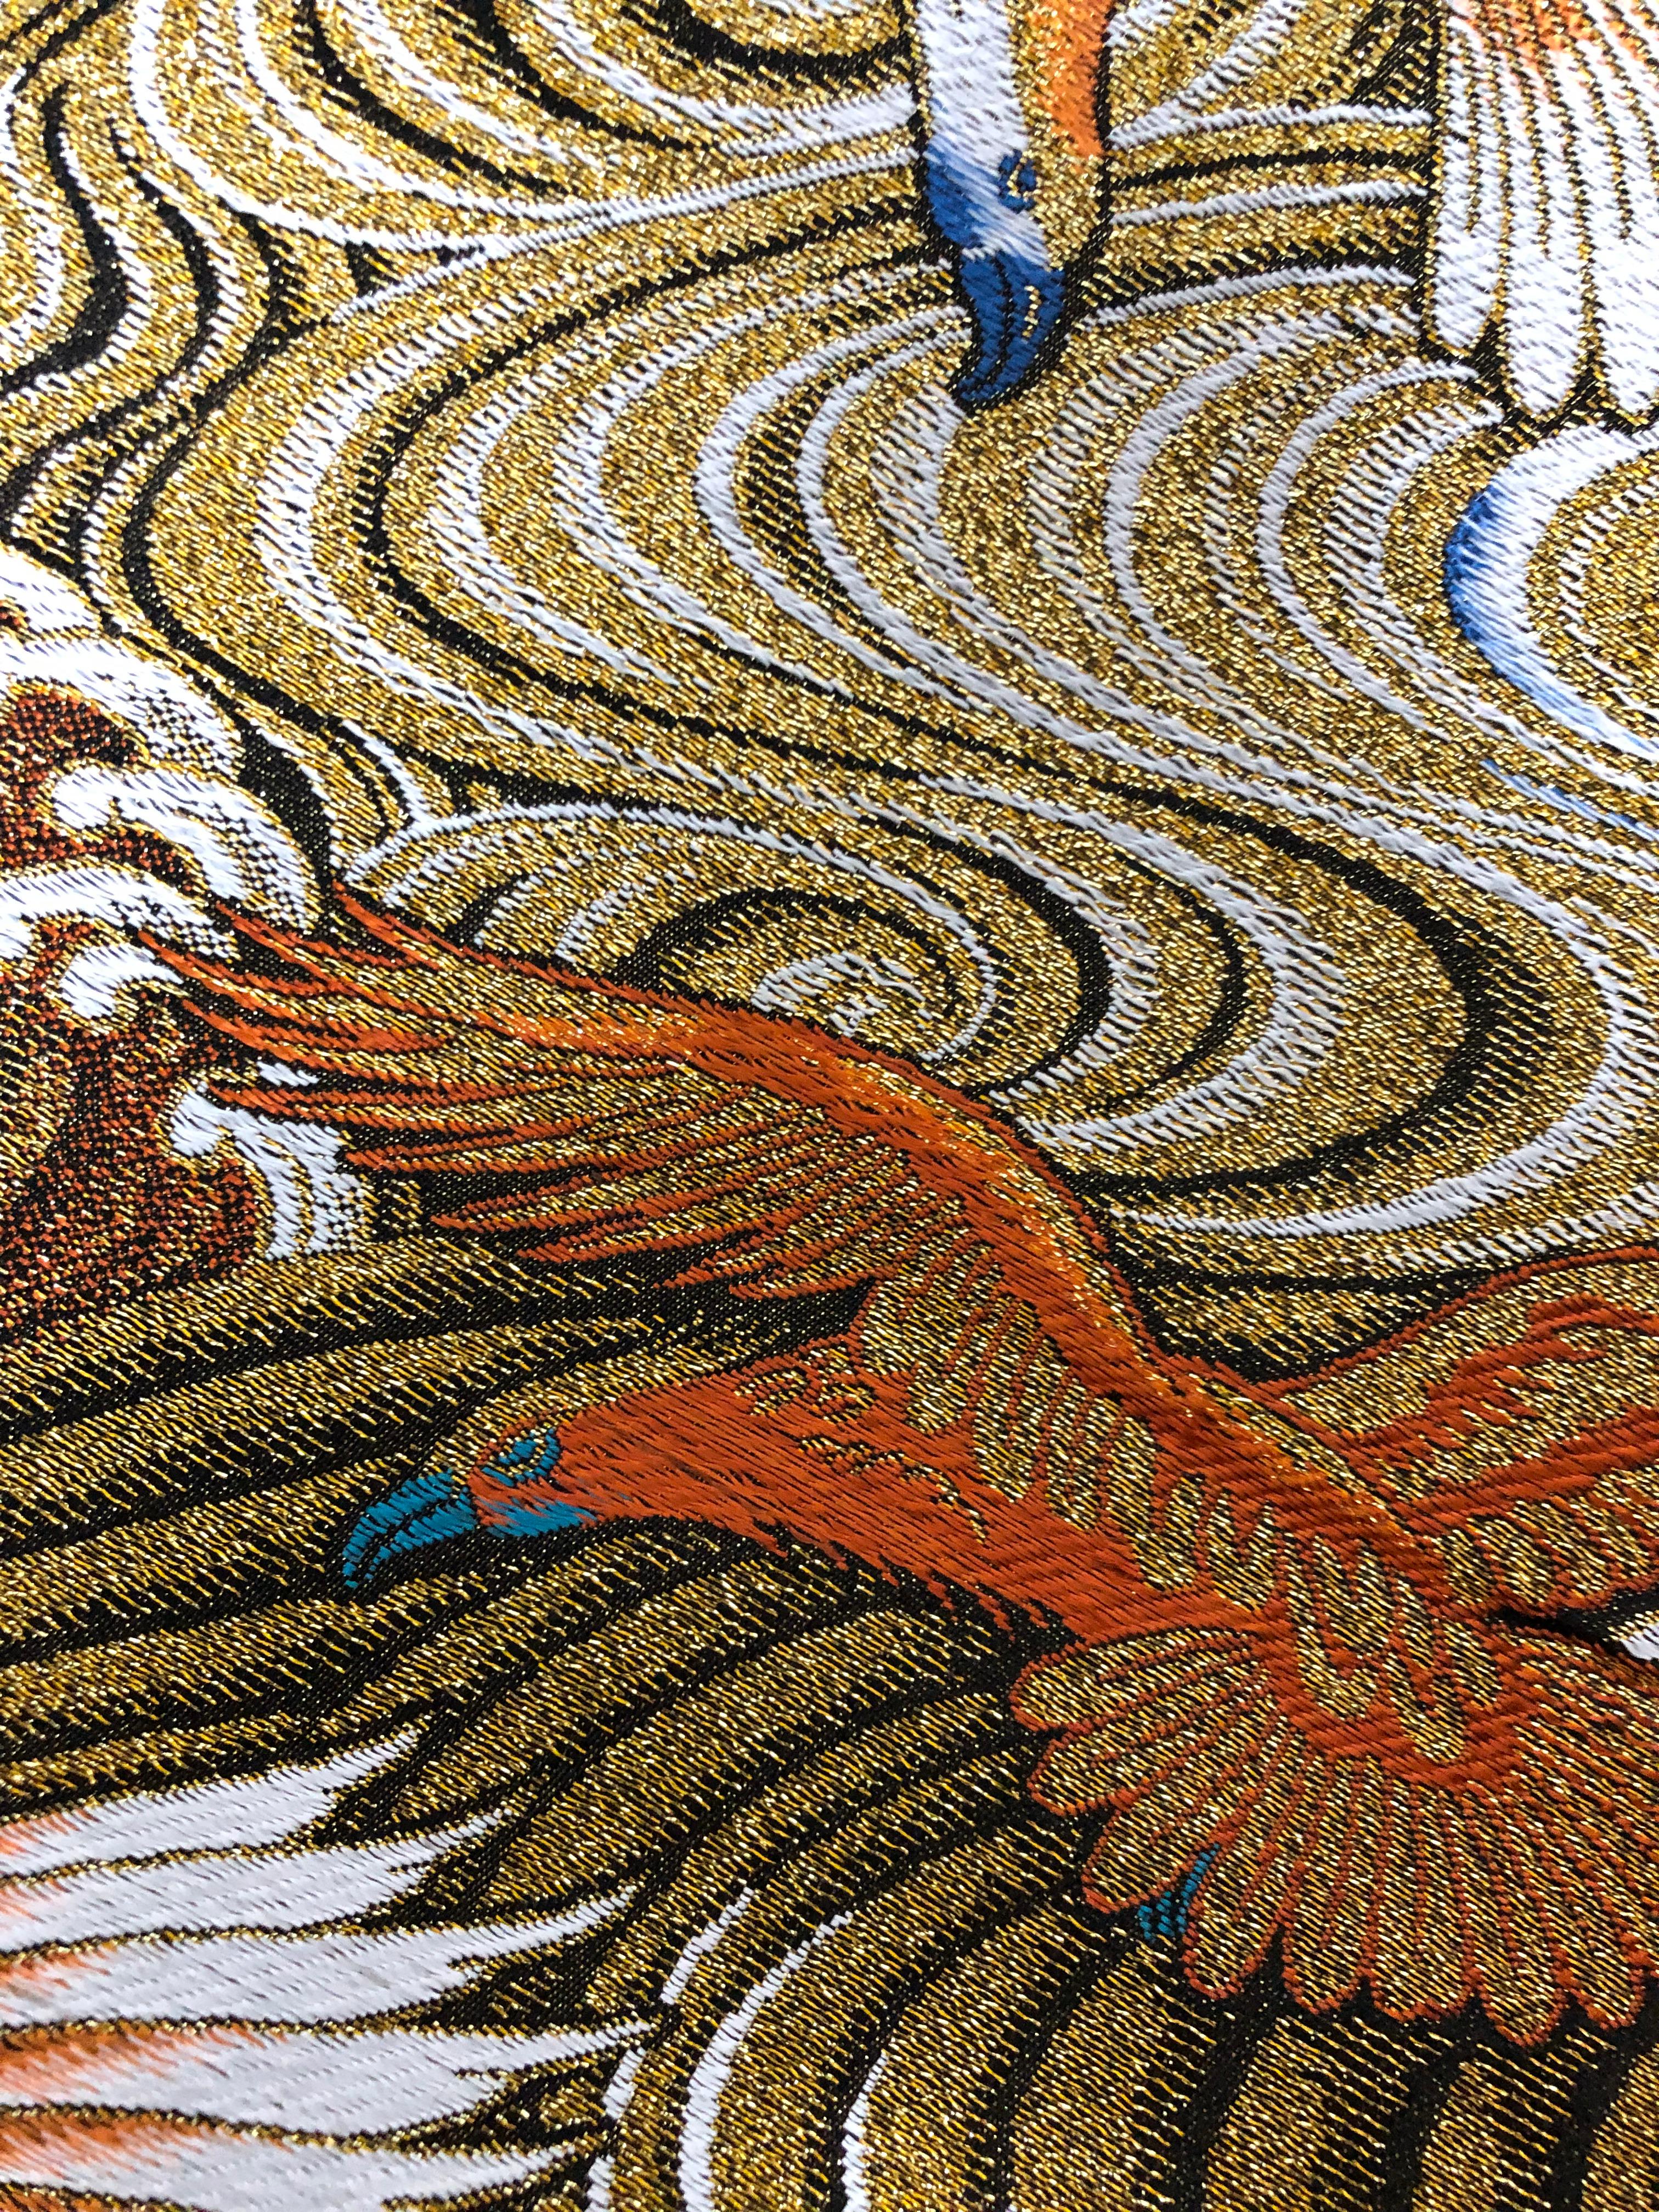 Hand-Crafted Japanese Kimono Art / Kimono Wall Art, Golden Migratory Birds